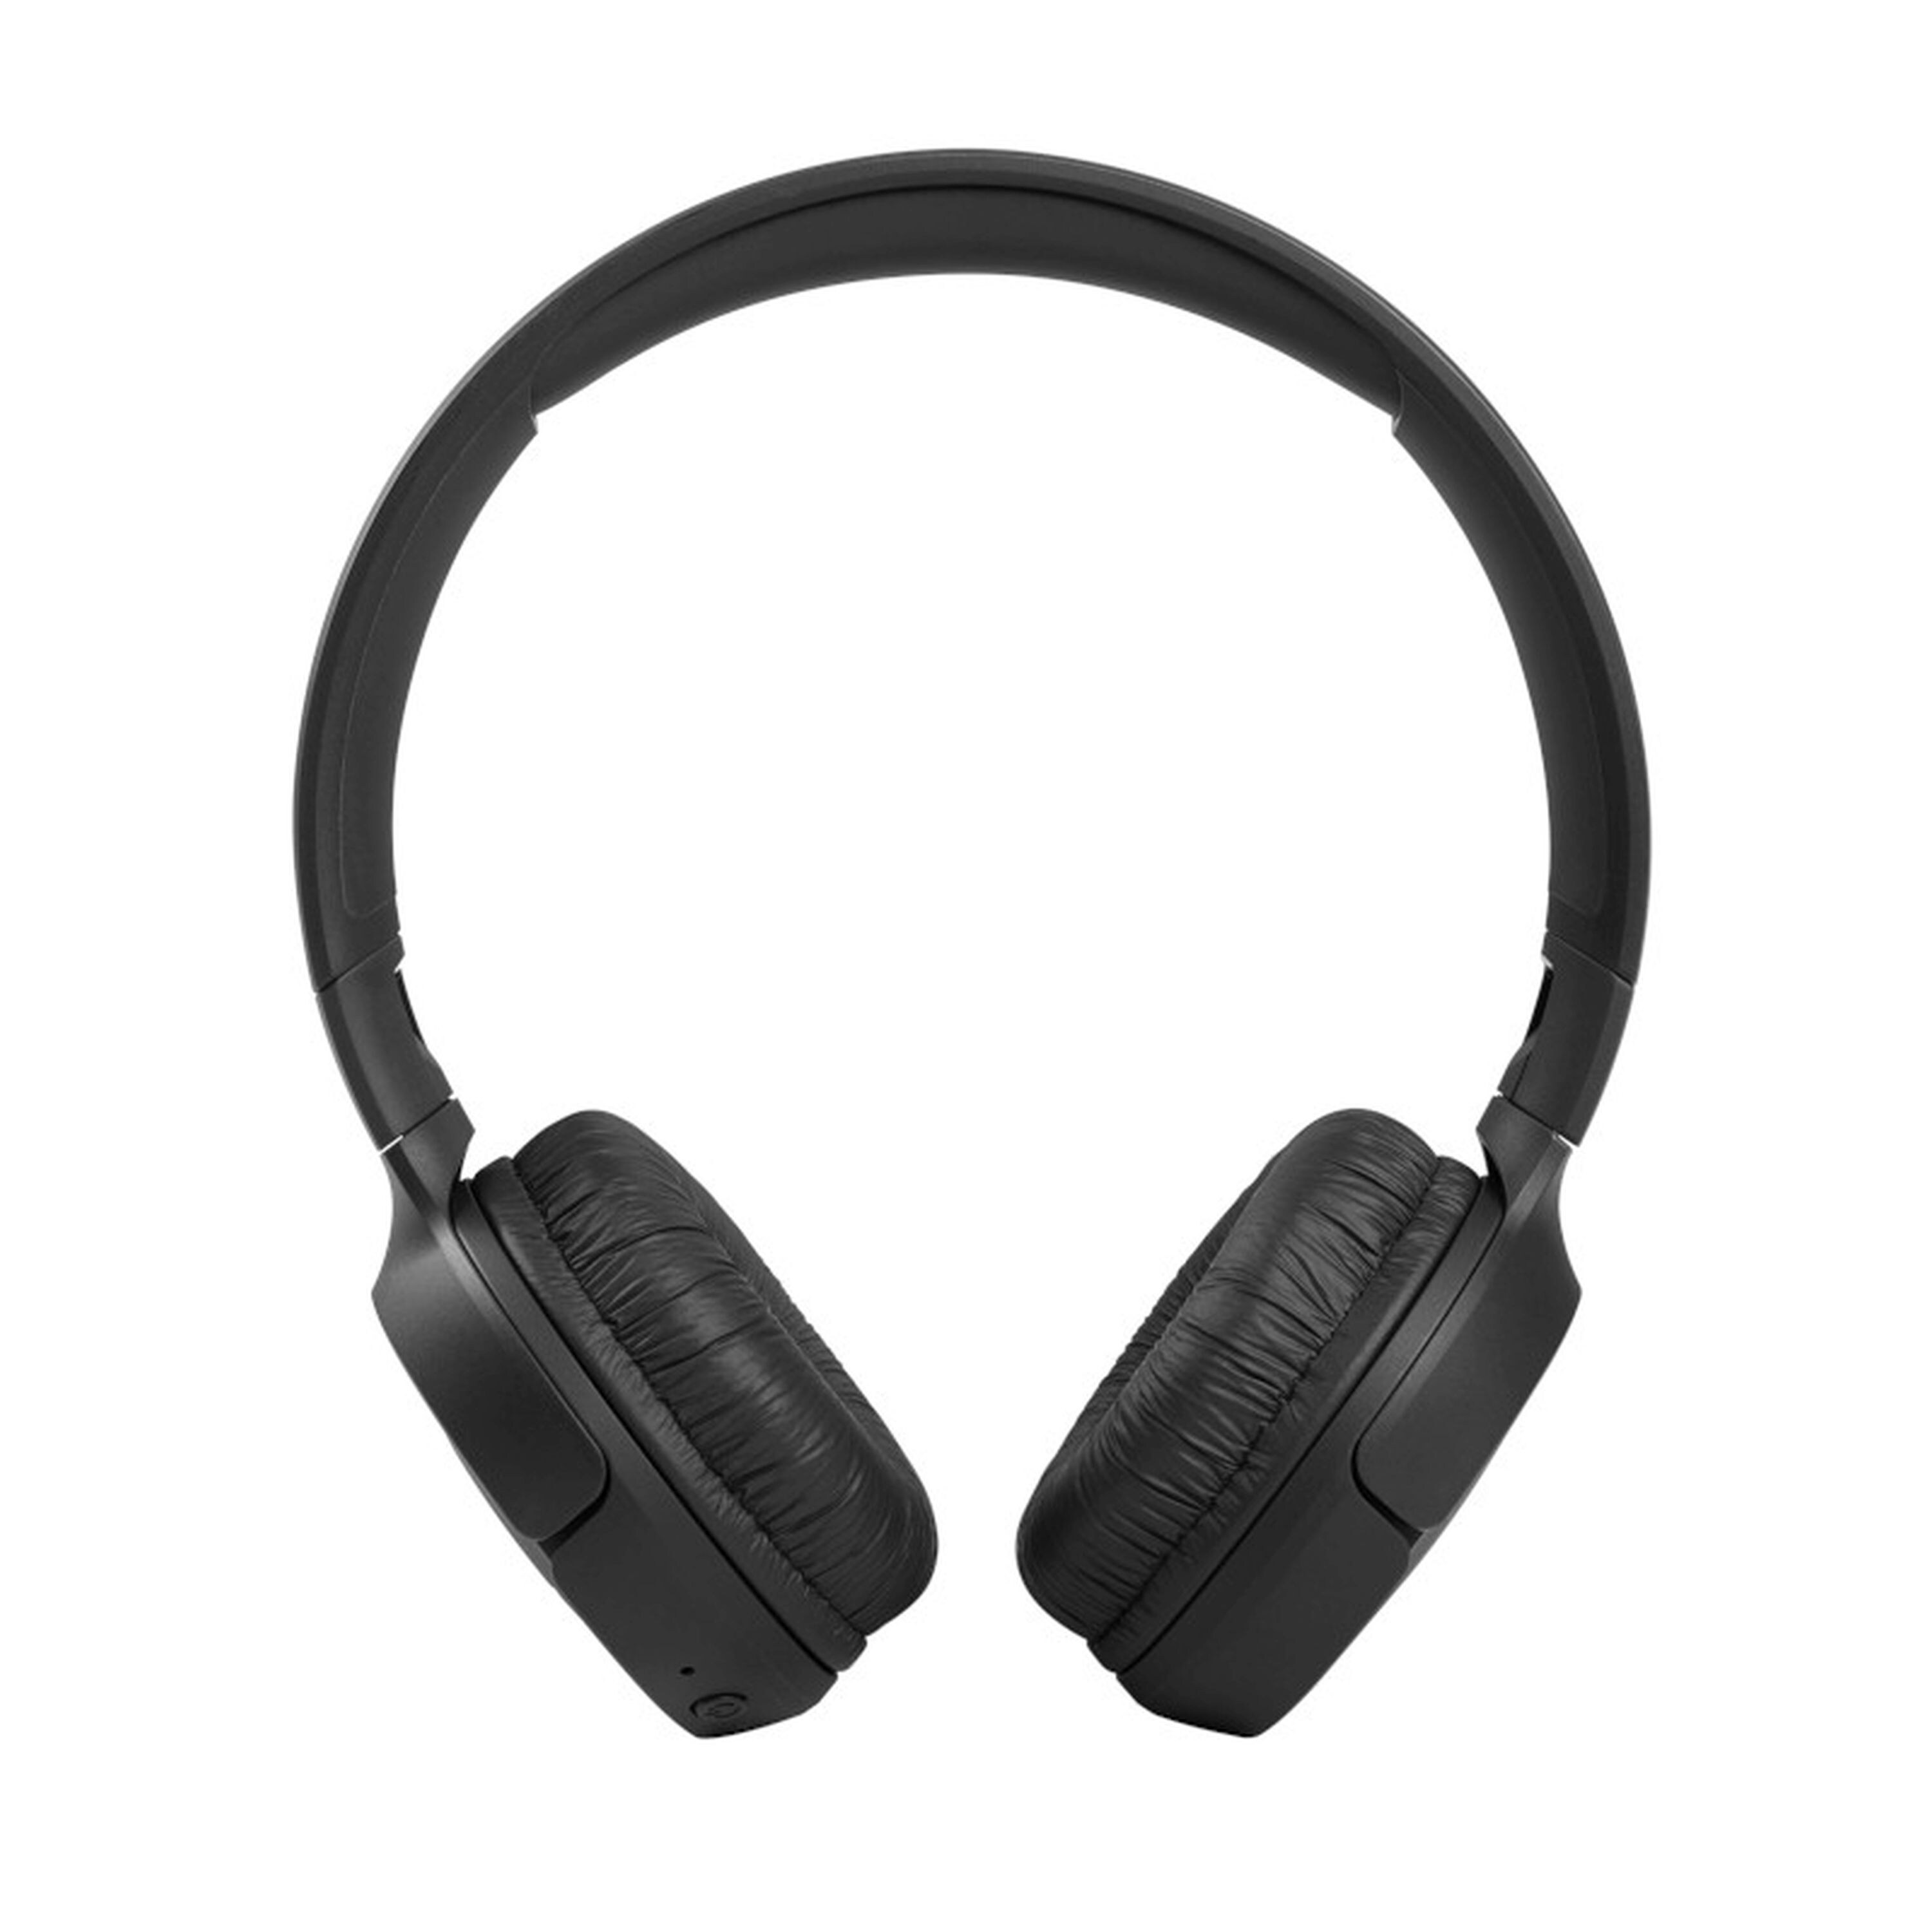 Ubrugelig forbrydelse spole JBL On The Ear Wireless Headphones in the Headphones department at Lowes.com